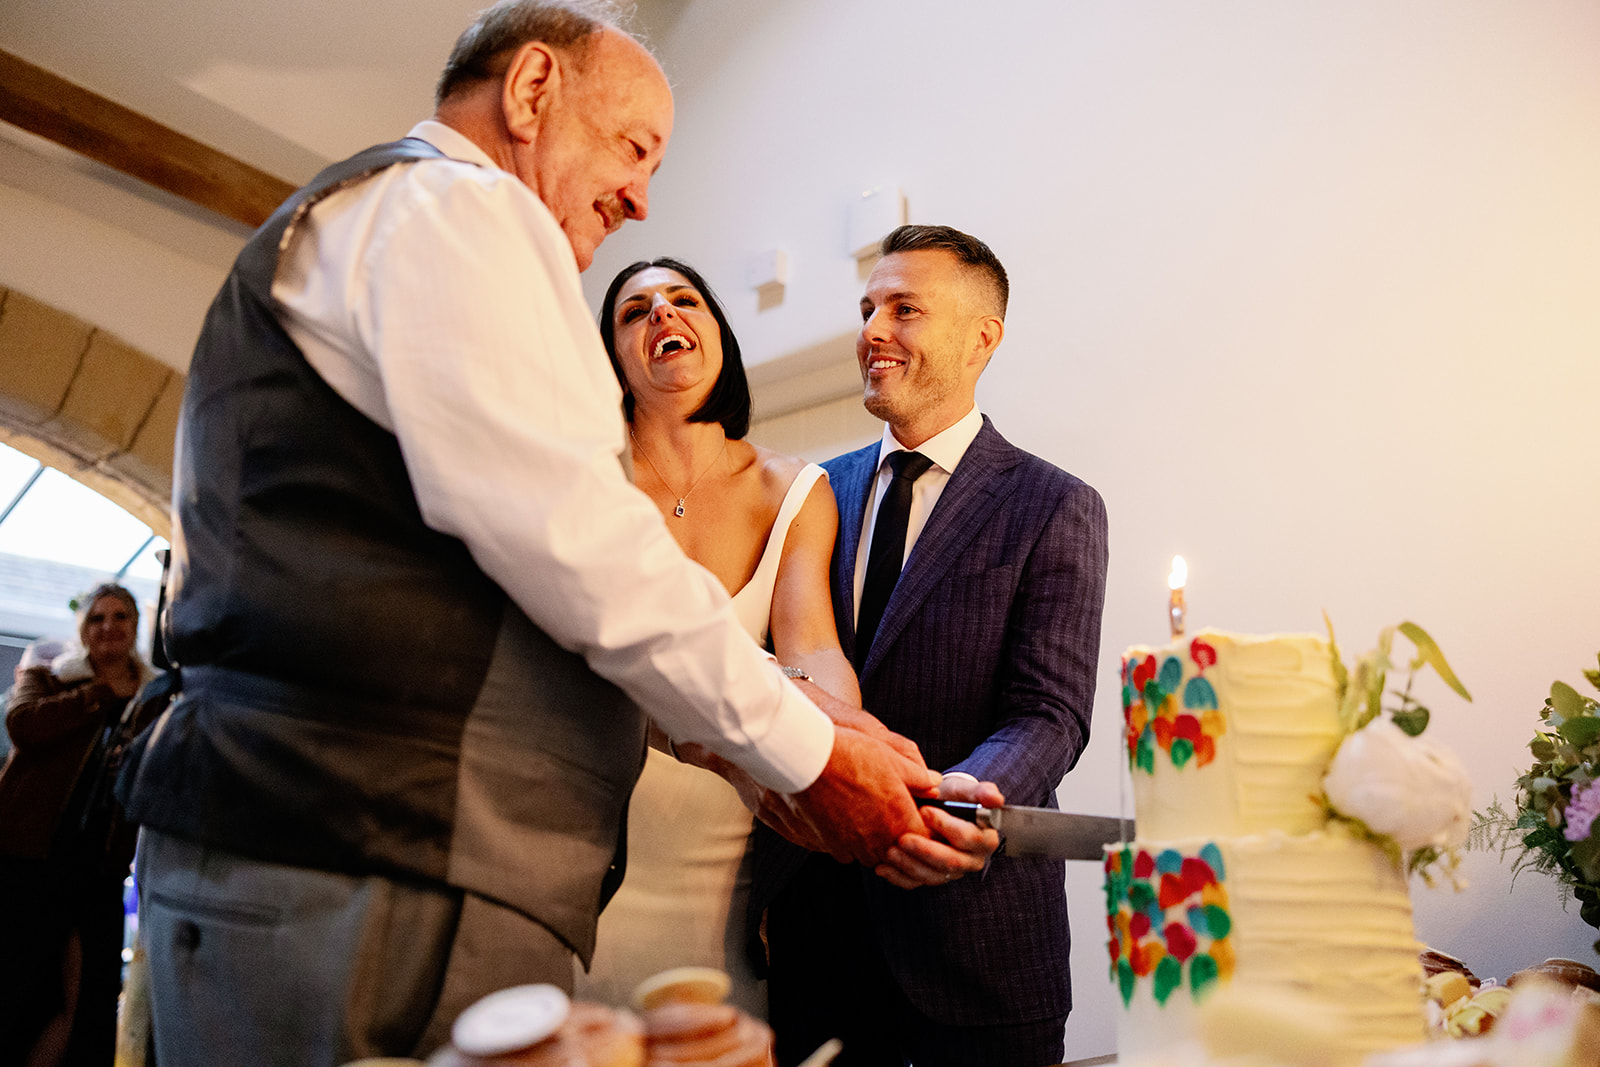 bride, groom and grandad cutting their shared wedding and birthday cake